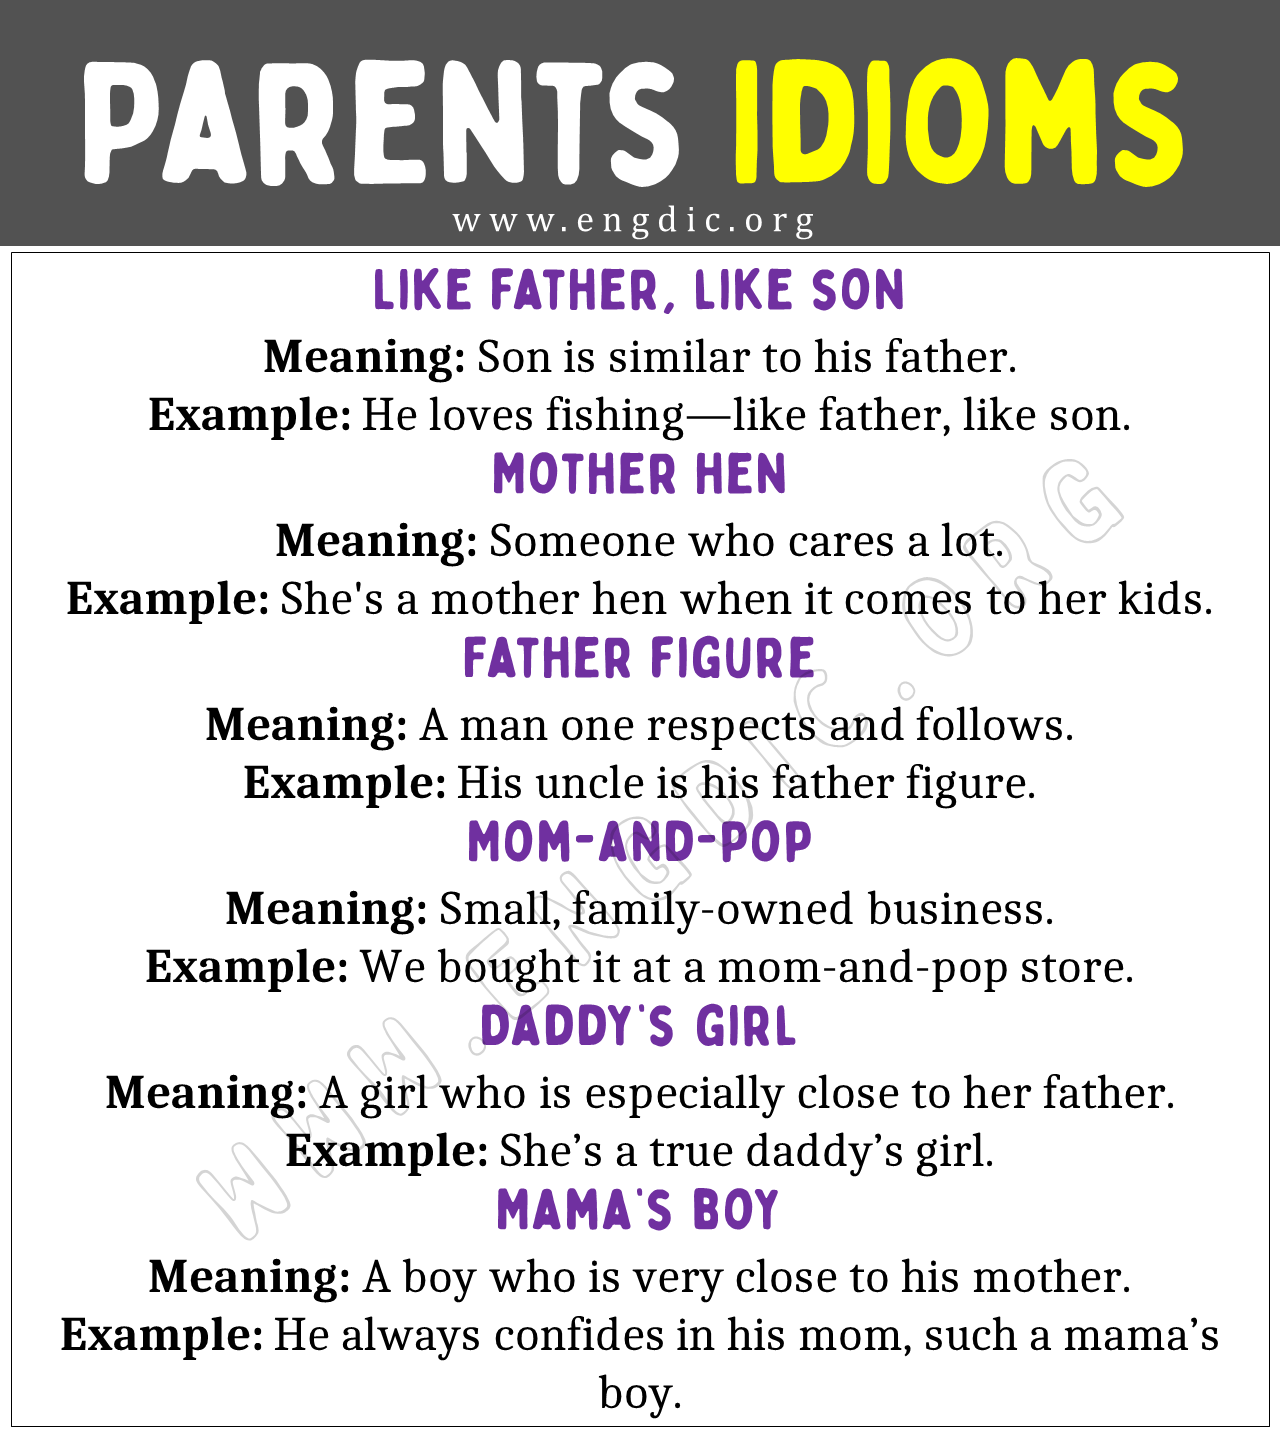 Parents Idioms